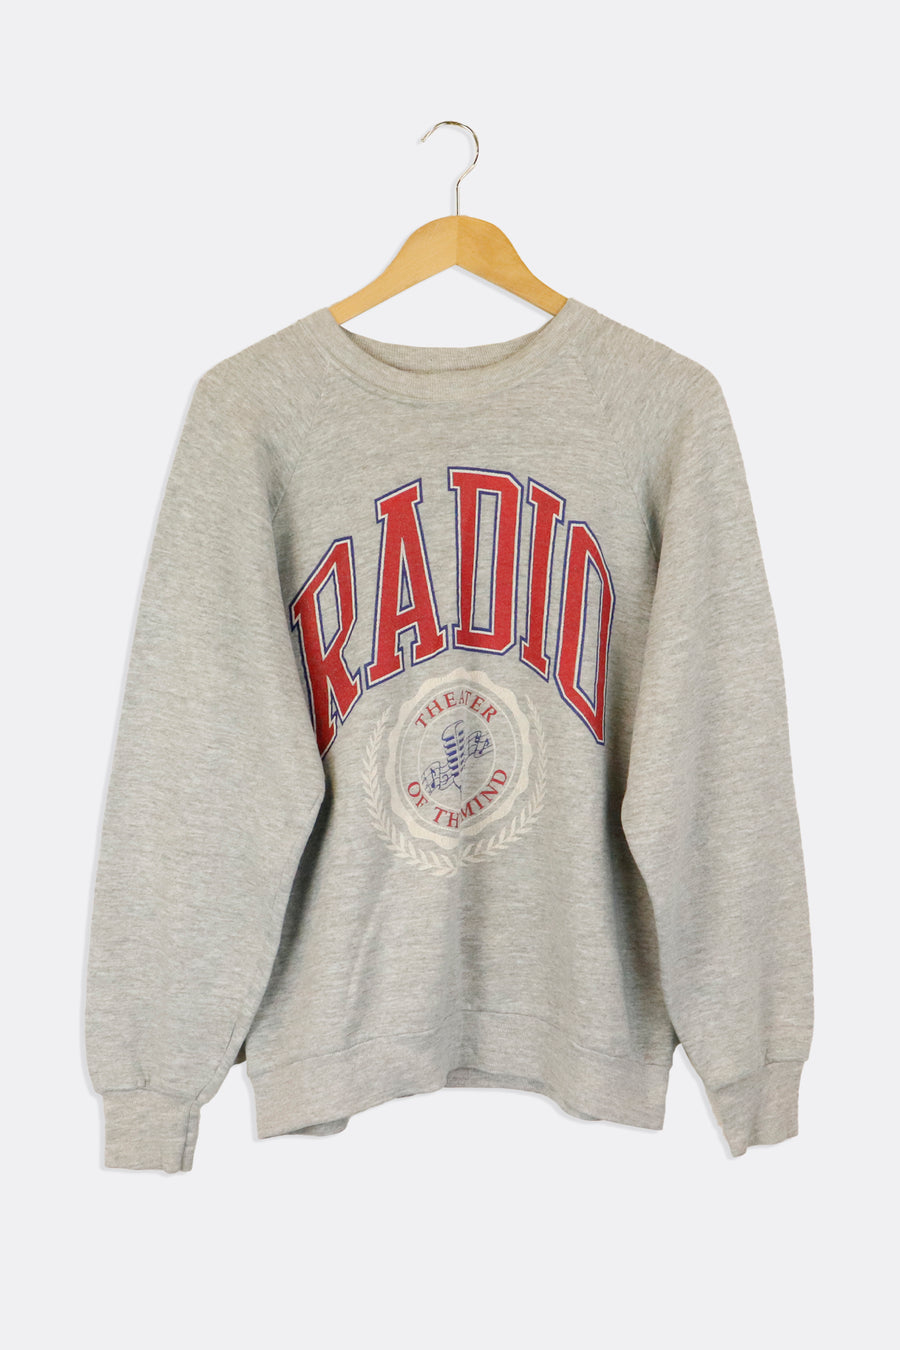 Vintage Radio Theatre Of Mind Varsity Style Graphic Sweatshirt Sz L